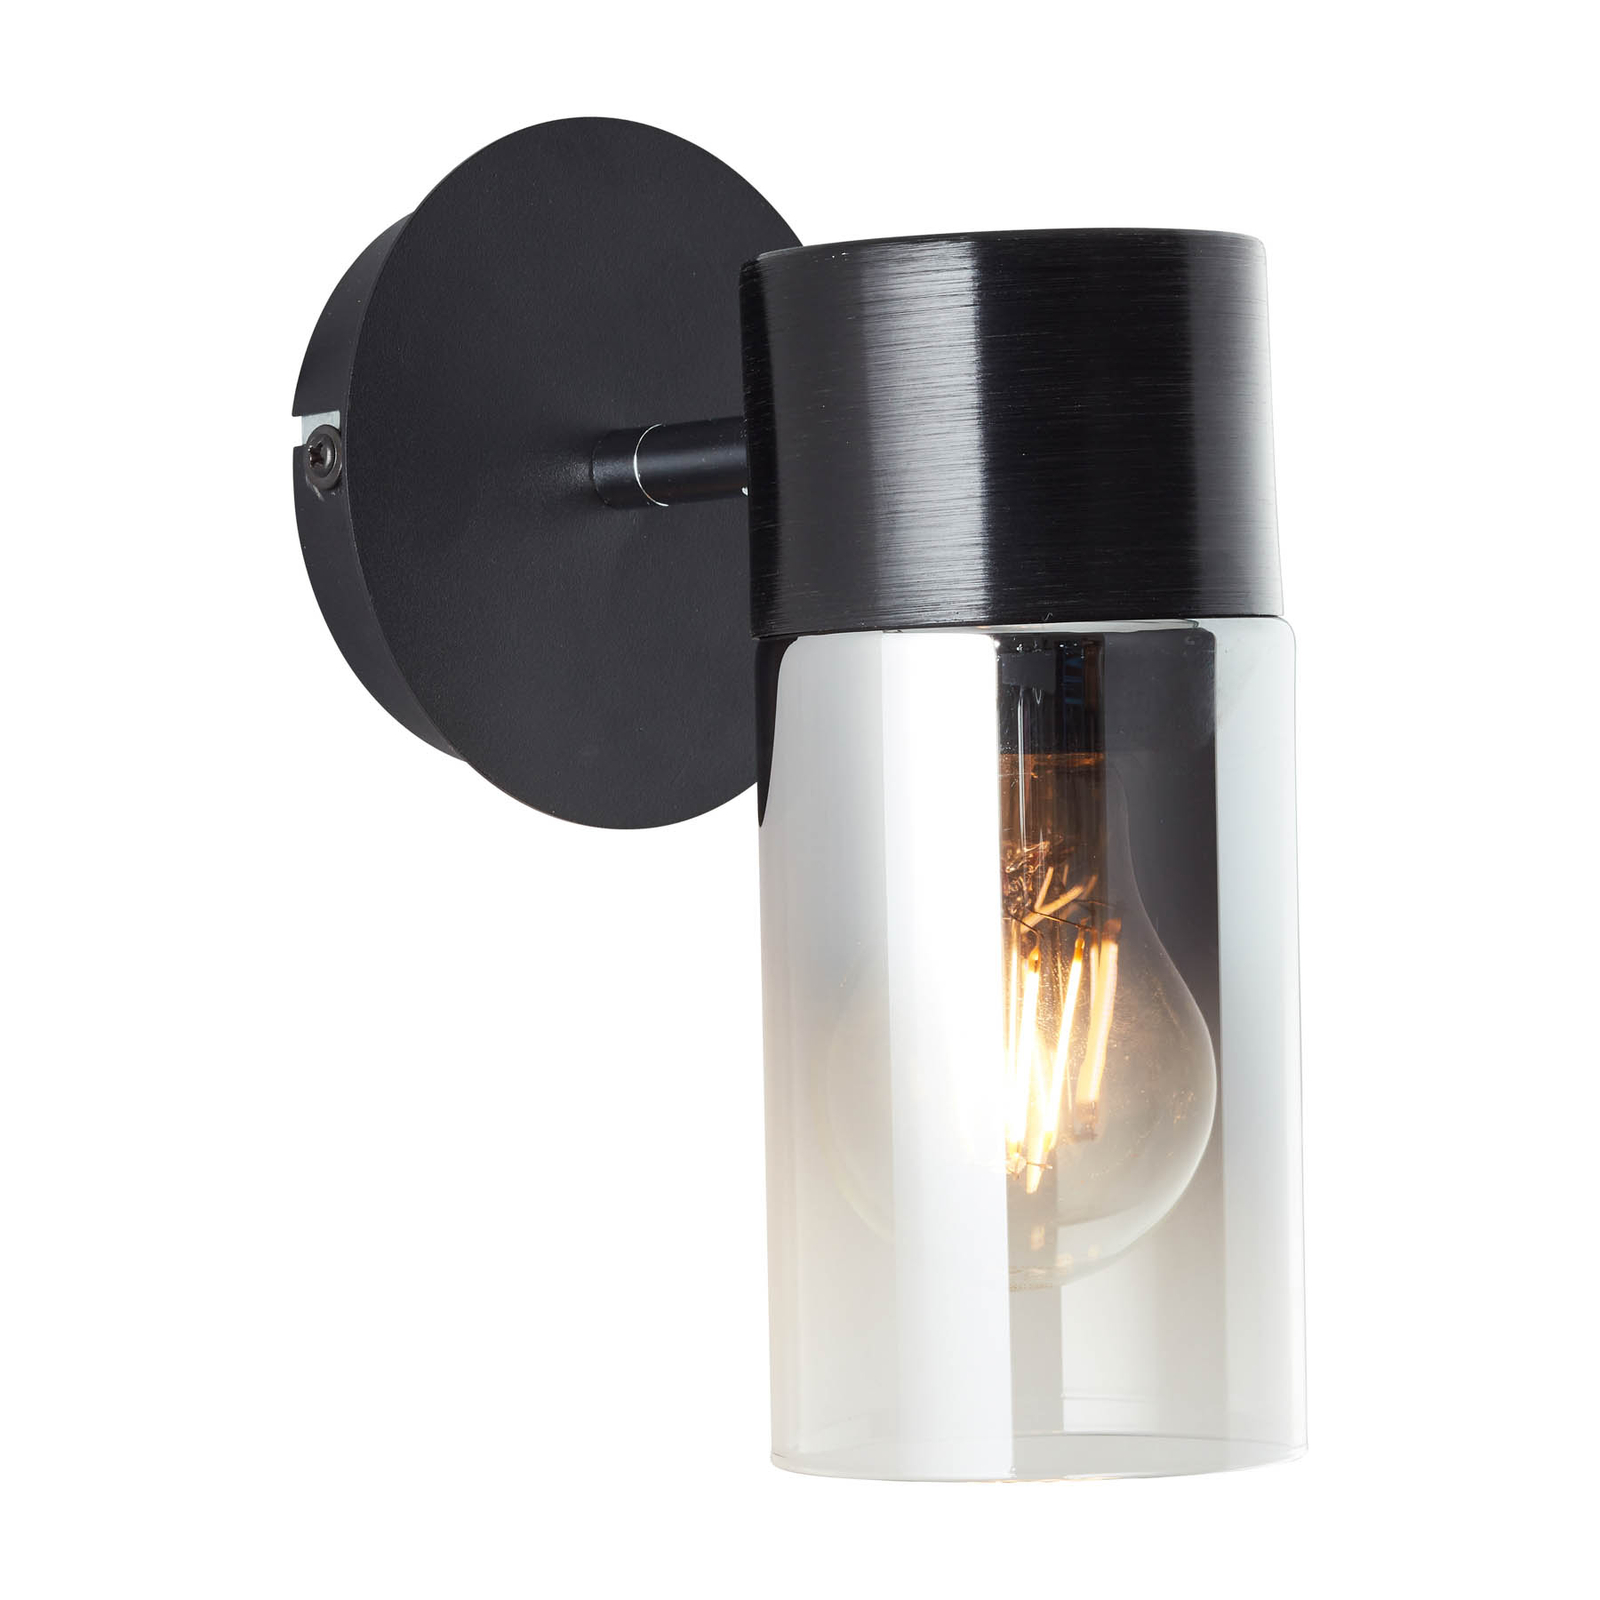 Alia wall spotlight, one-bulb, black/smoke